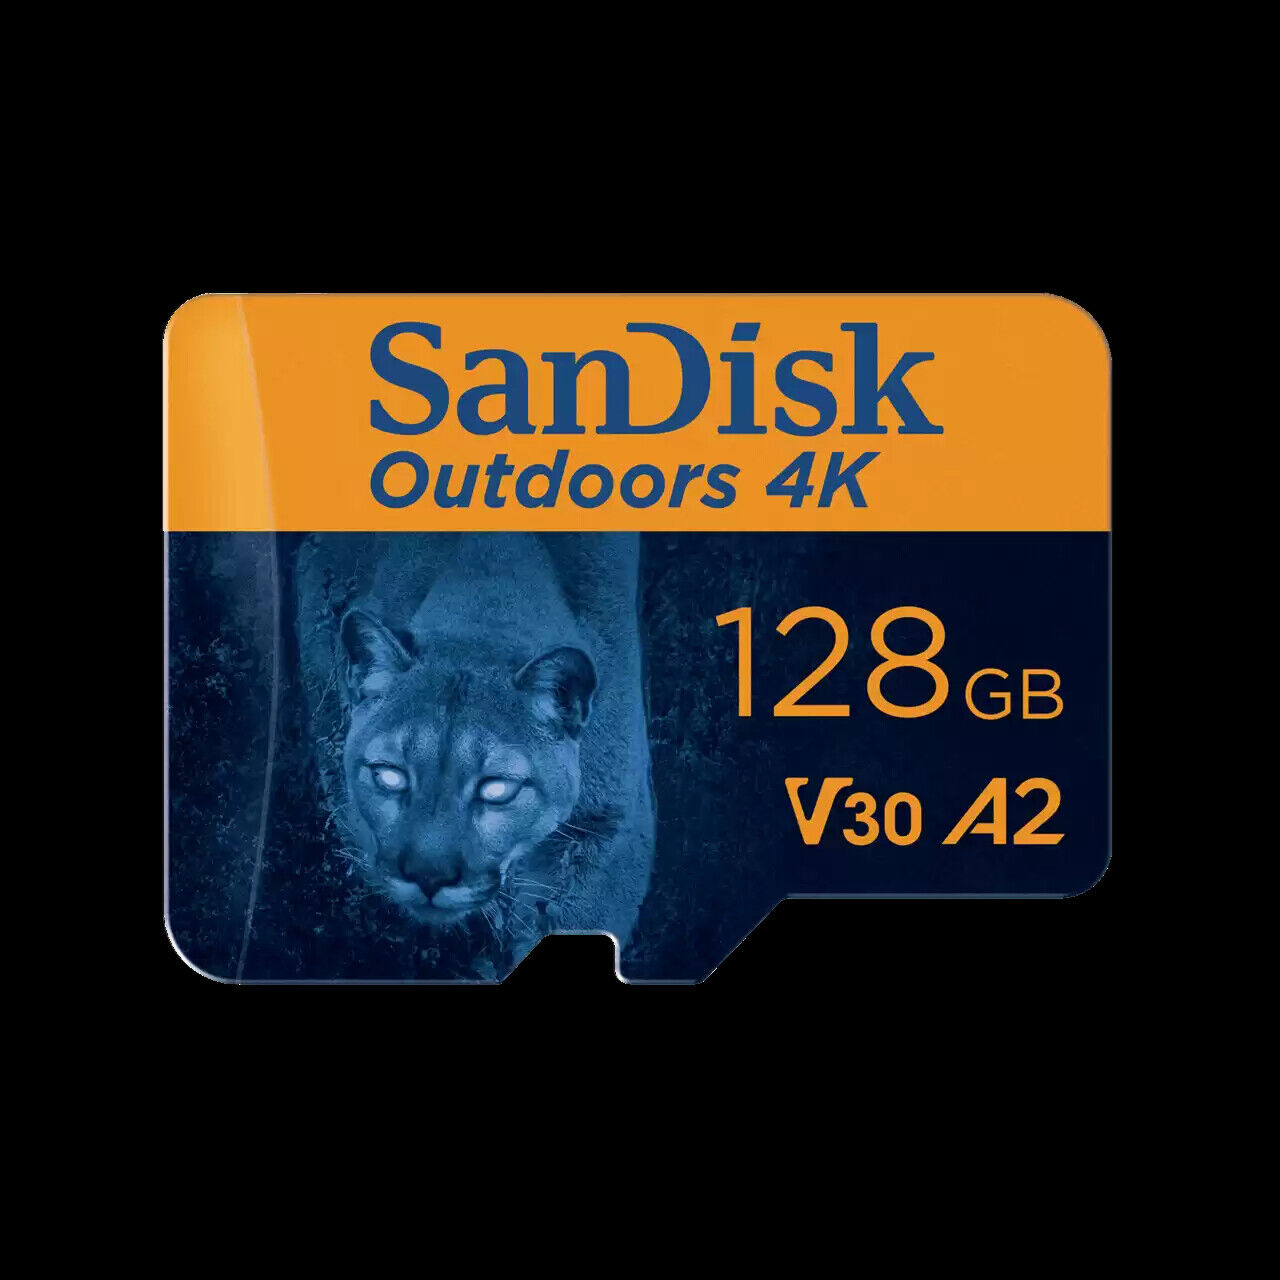 SanDisk 128GB Outdoors 4K microSDXC UHS-I Memory Card 2-Pack SDSQXAA-128G-GN6VT